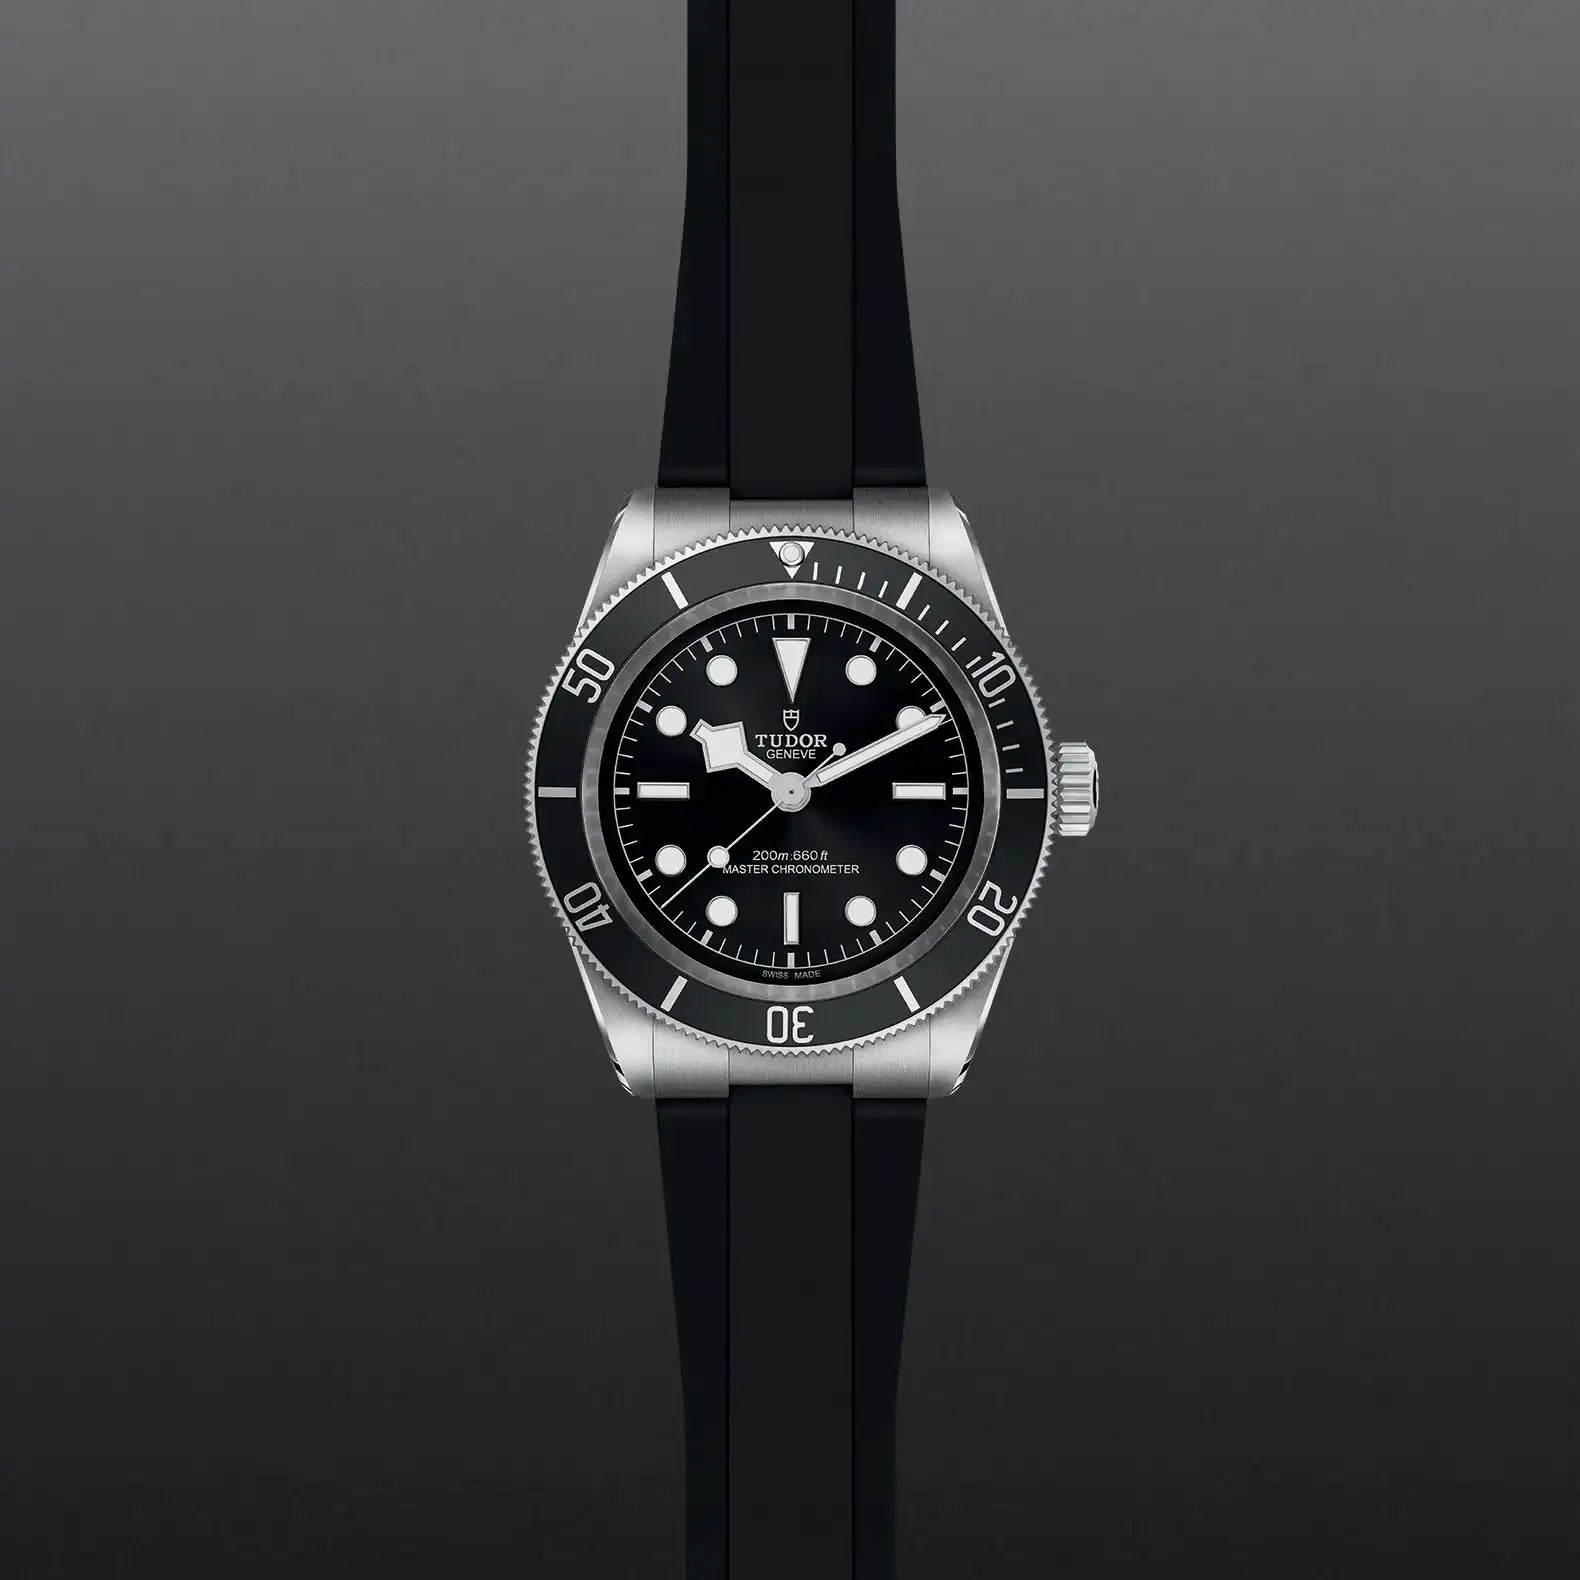 Tudor Black Bay Black dial Men's watch 41mm M7941A1A0NU-0002